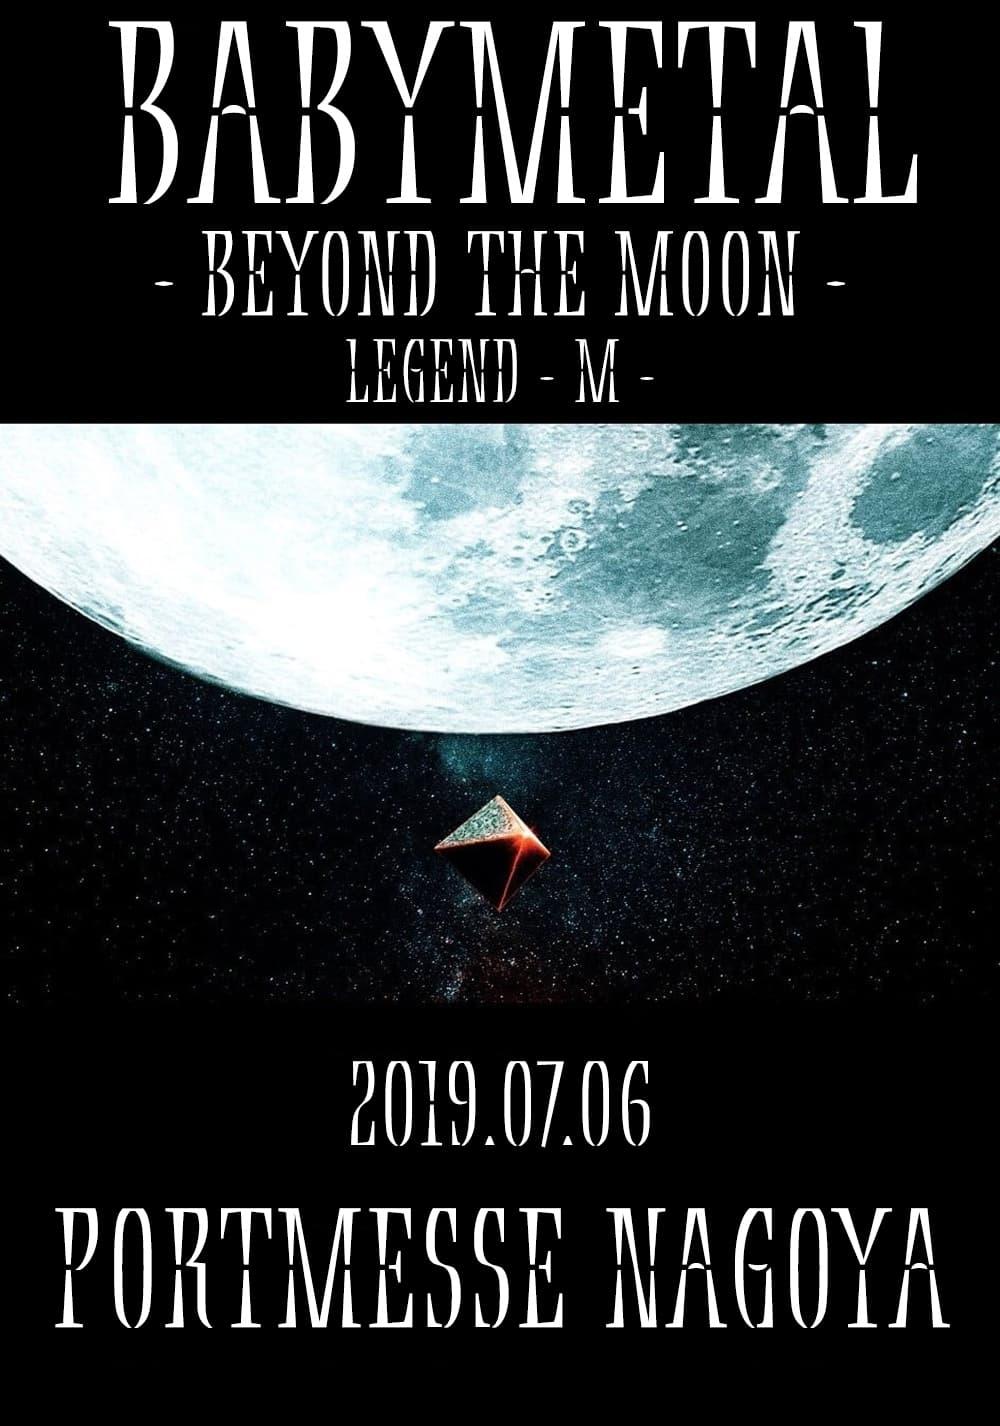 BABYMETAL - Arises - Beyond The Moon - Legend - M - poster